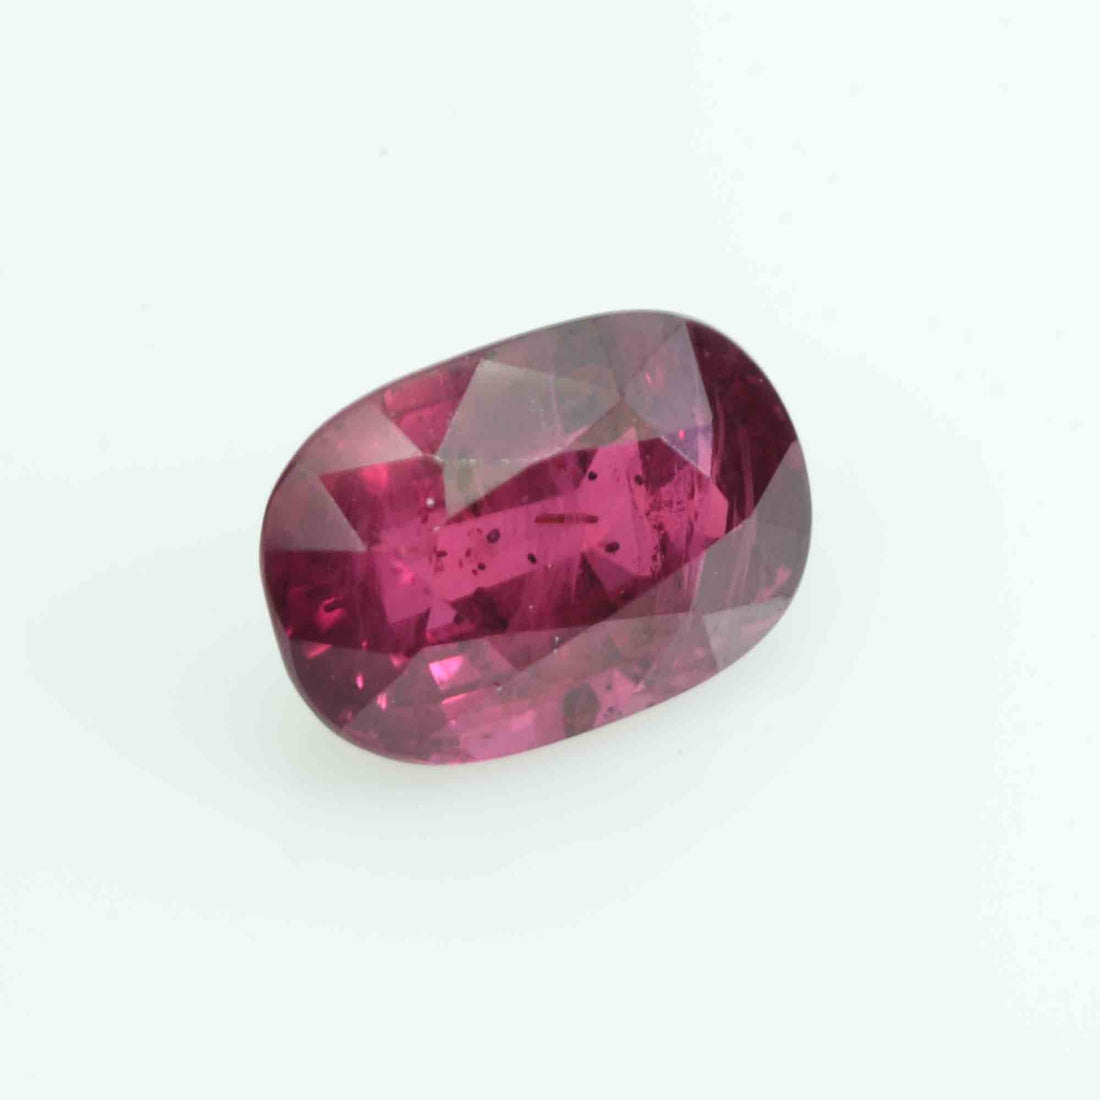 2.14 Cts Natural Ruby Loose Gemstone Cushion Cut